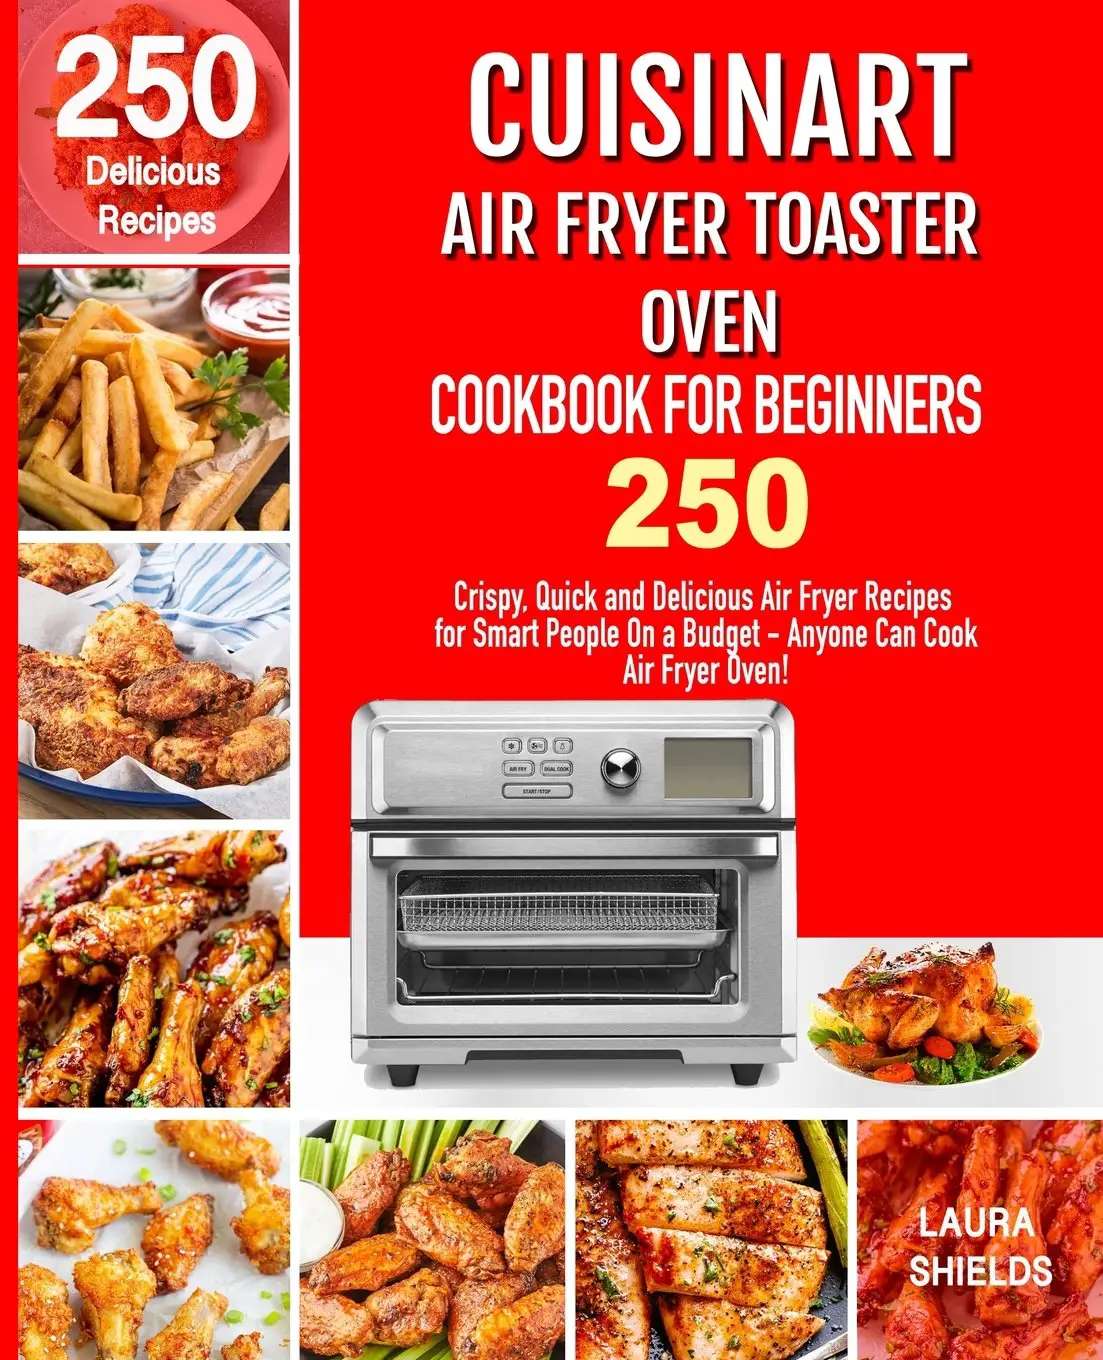 Cuisinart Air Fryer Toaster Oven Cookbook for Beginners ...